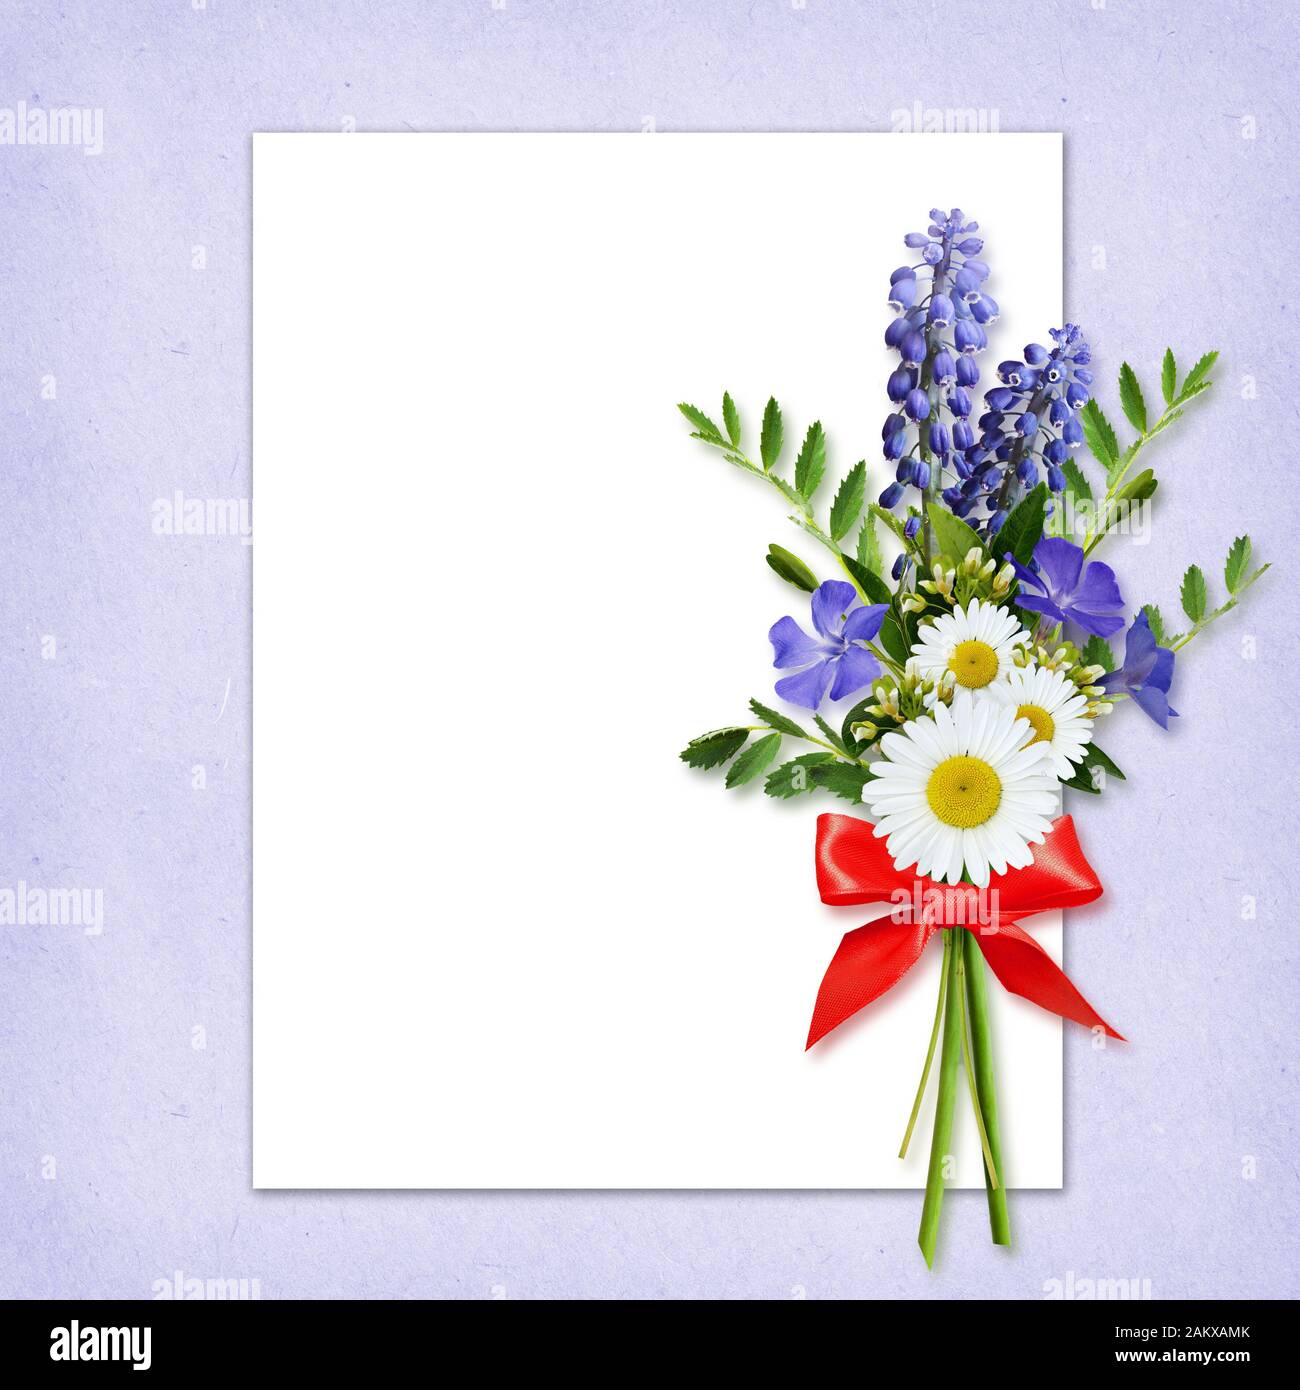 Bouquet di fiori selvatici su sfondo bianco e blu Foto Stock